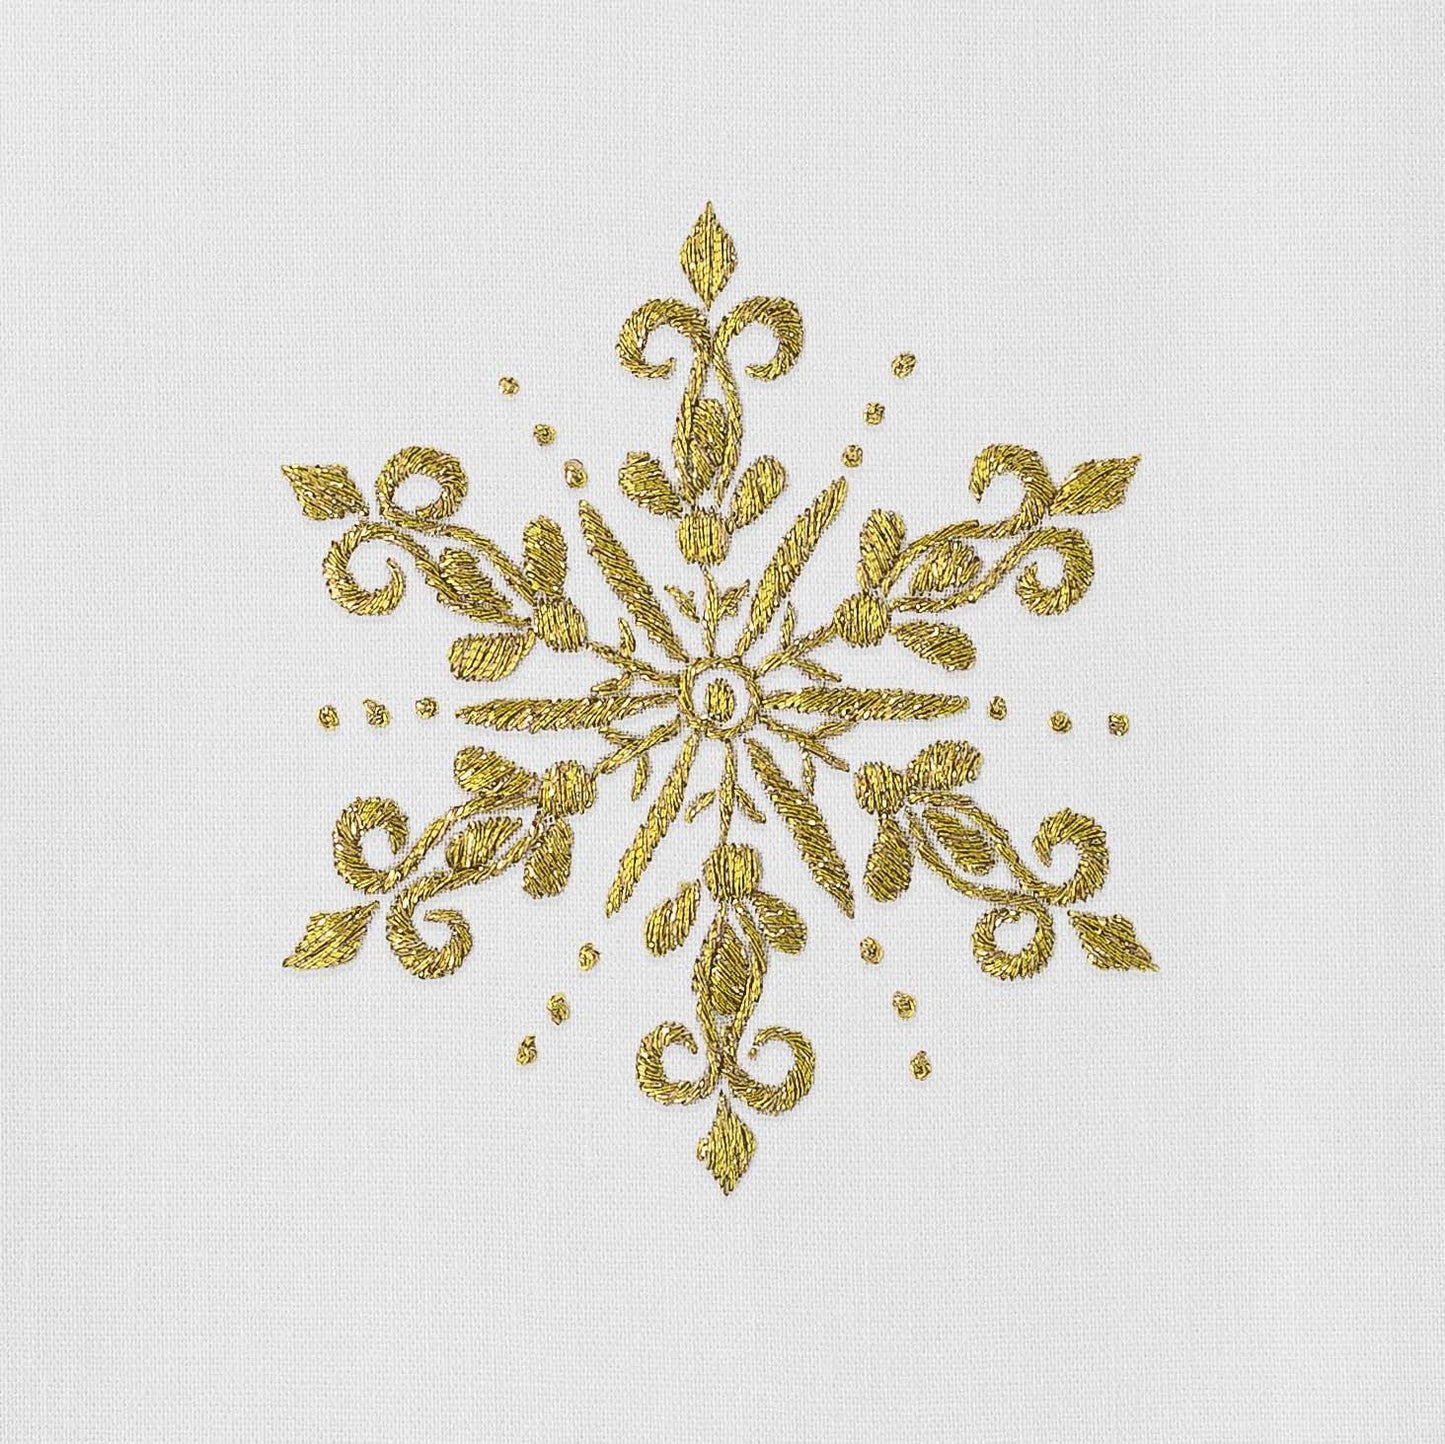 Snowflake Gold Hand Towel